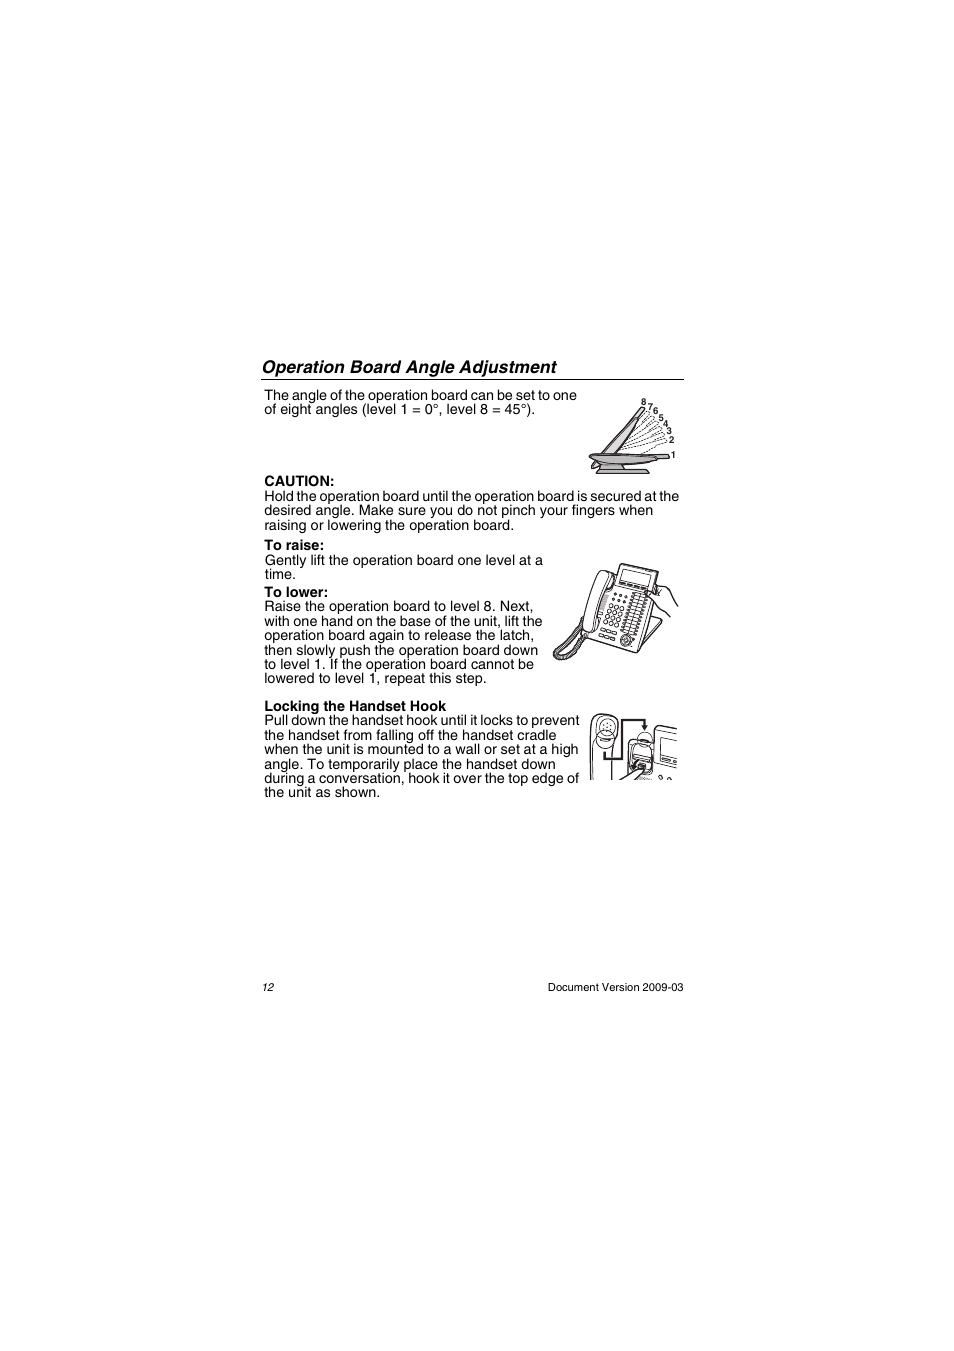 Operation board angle adjustment | Panasonic kx-dt343 User Manual